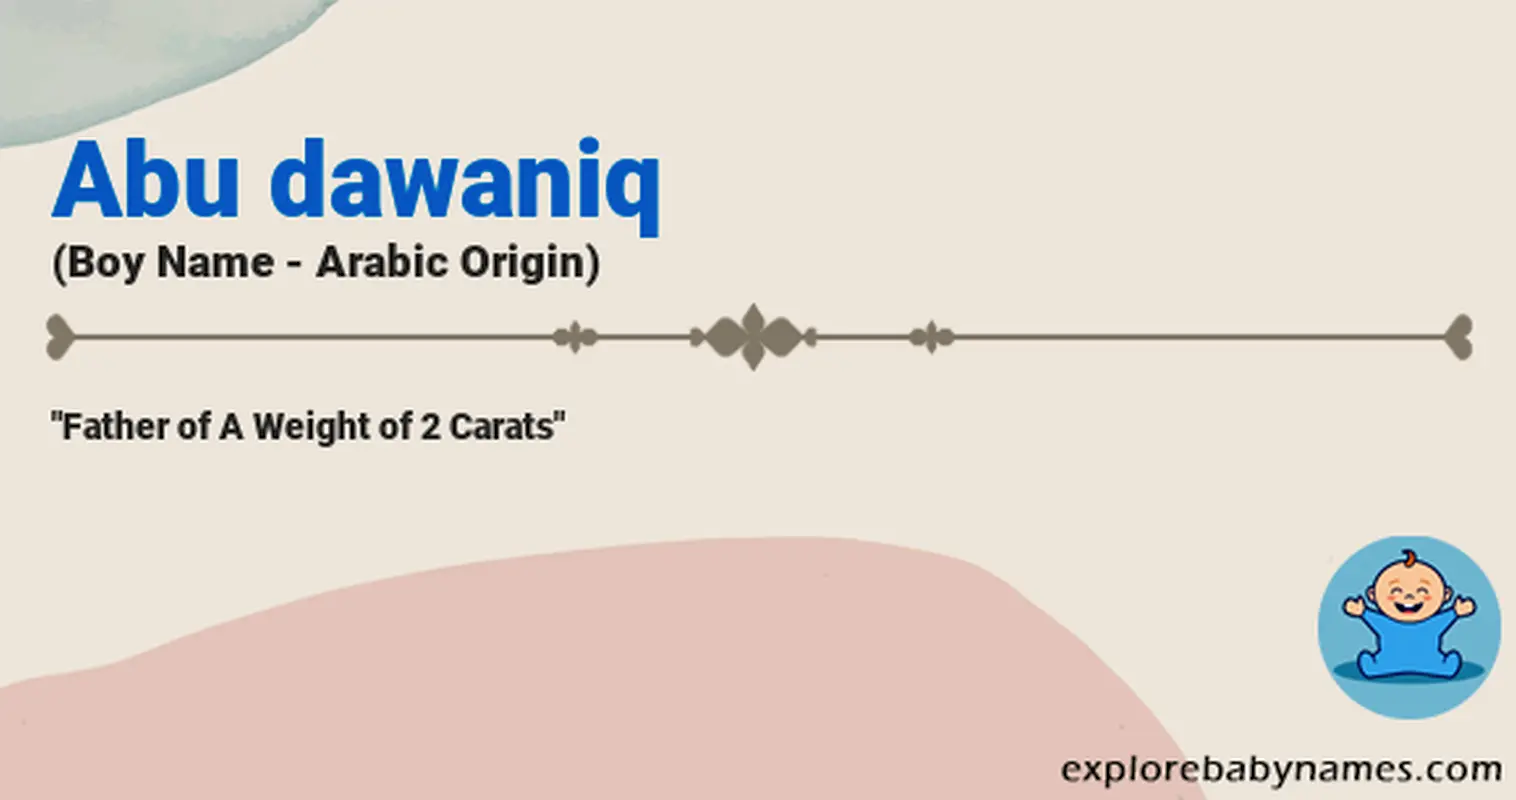 Meaning of Abu dawaniq